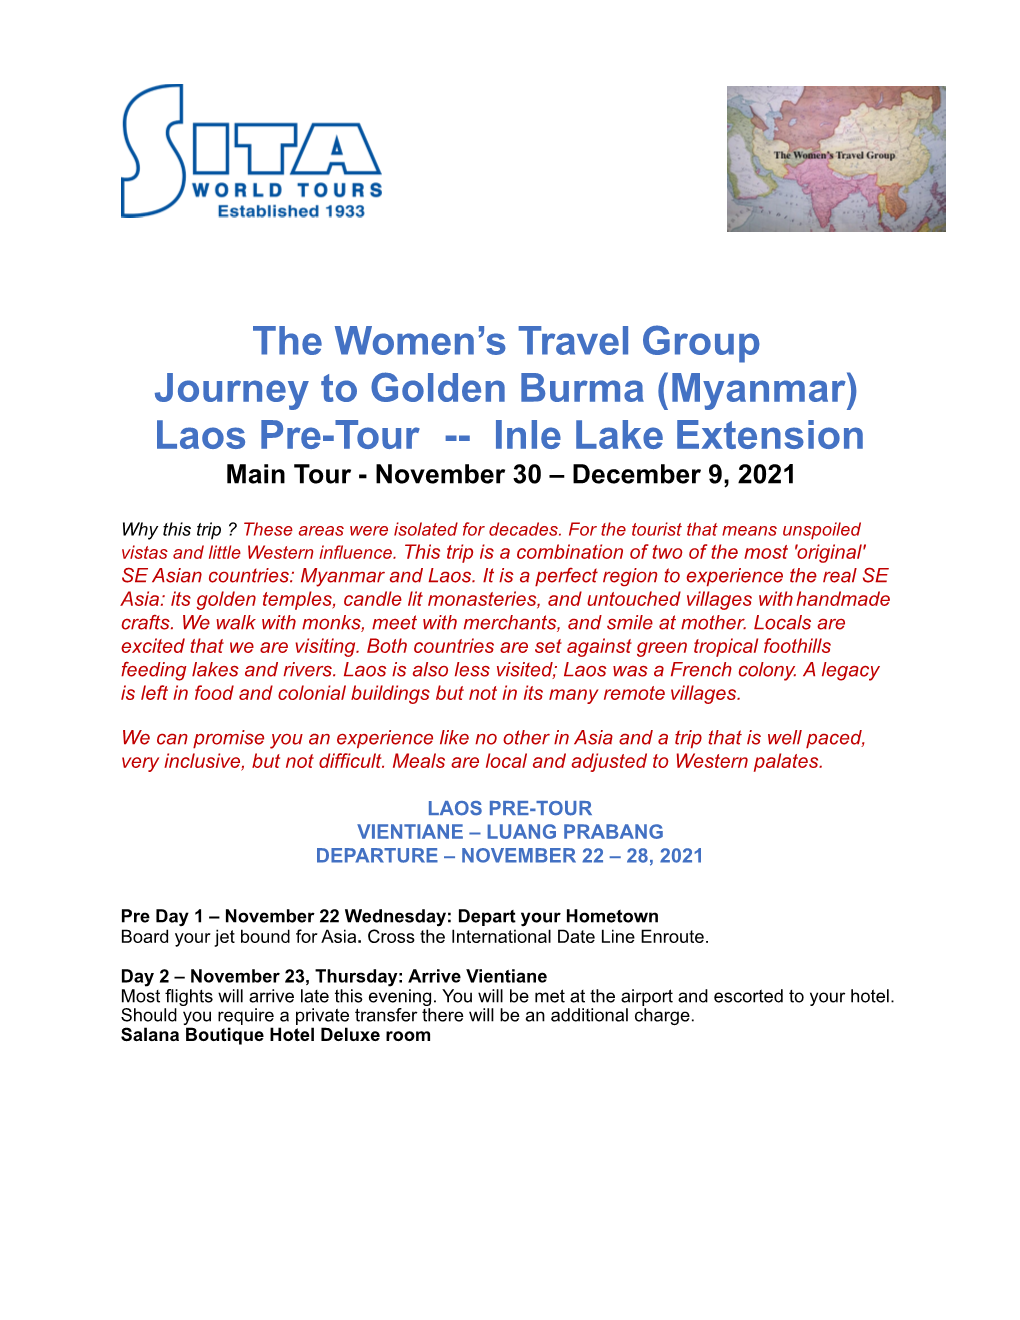 The Women's Travel Group Journey to Golden Burma (Myanmar) Laos Pre-Tour -- Inle Lake Extension